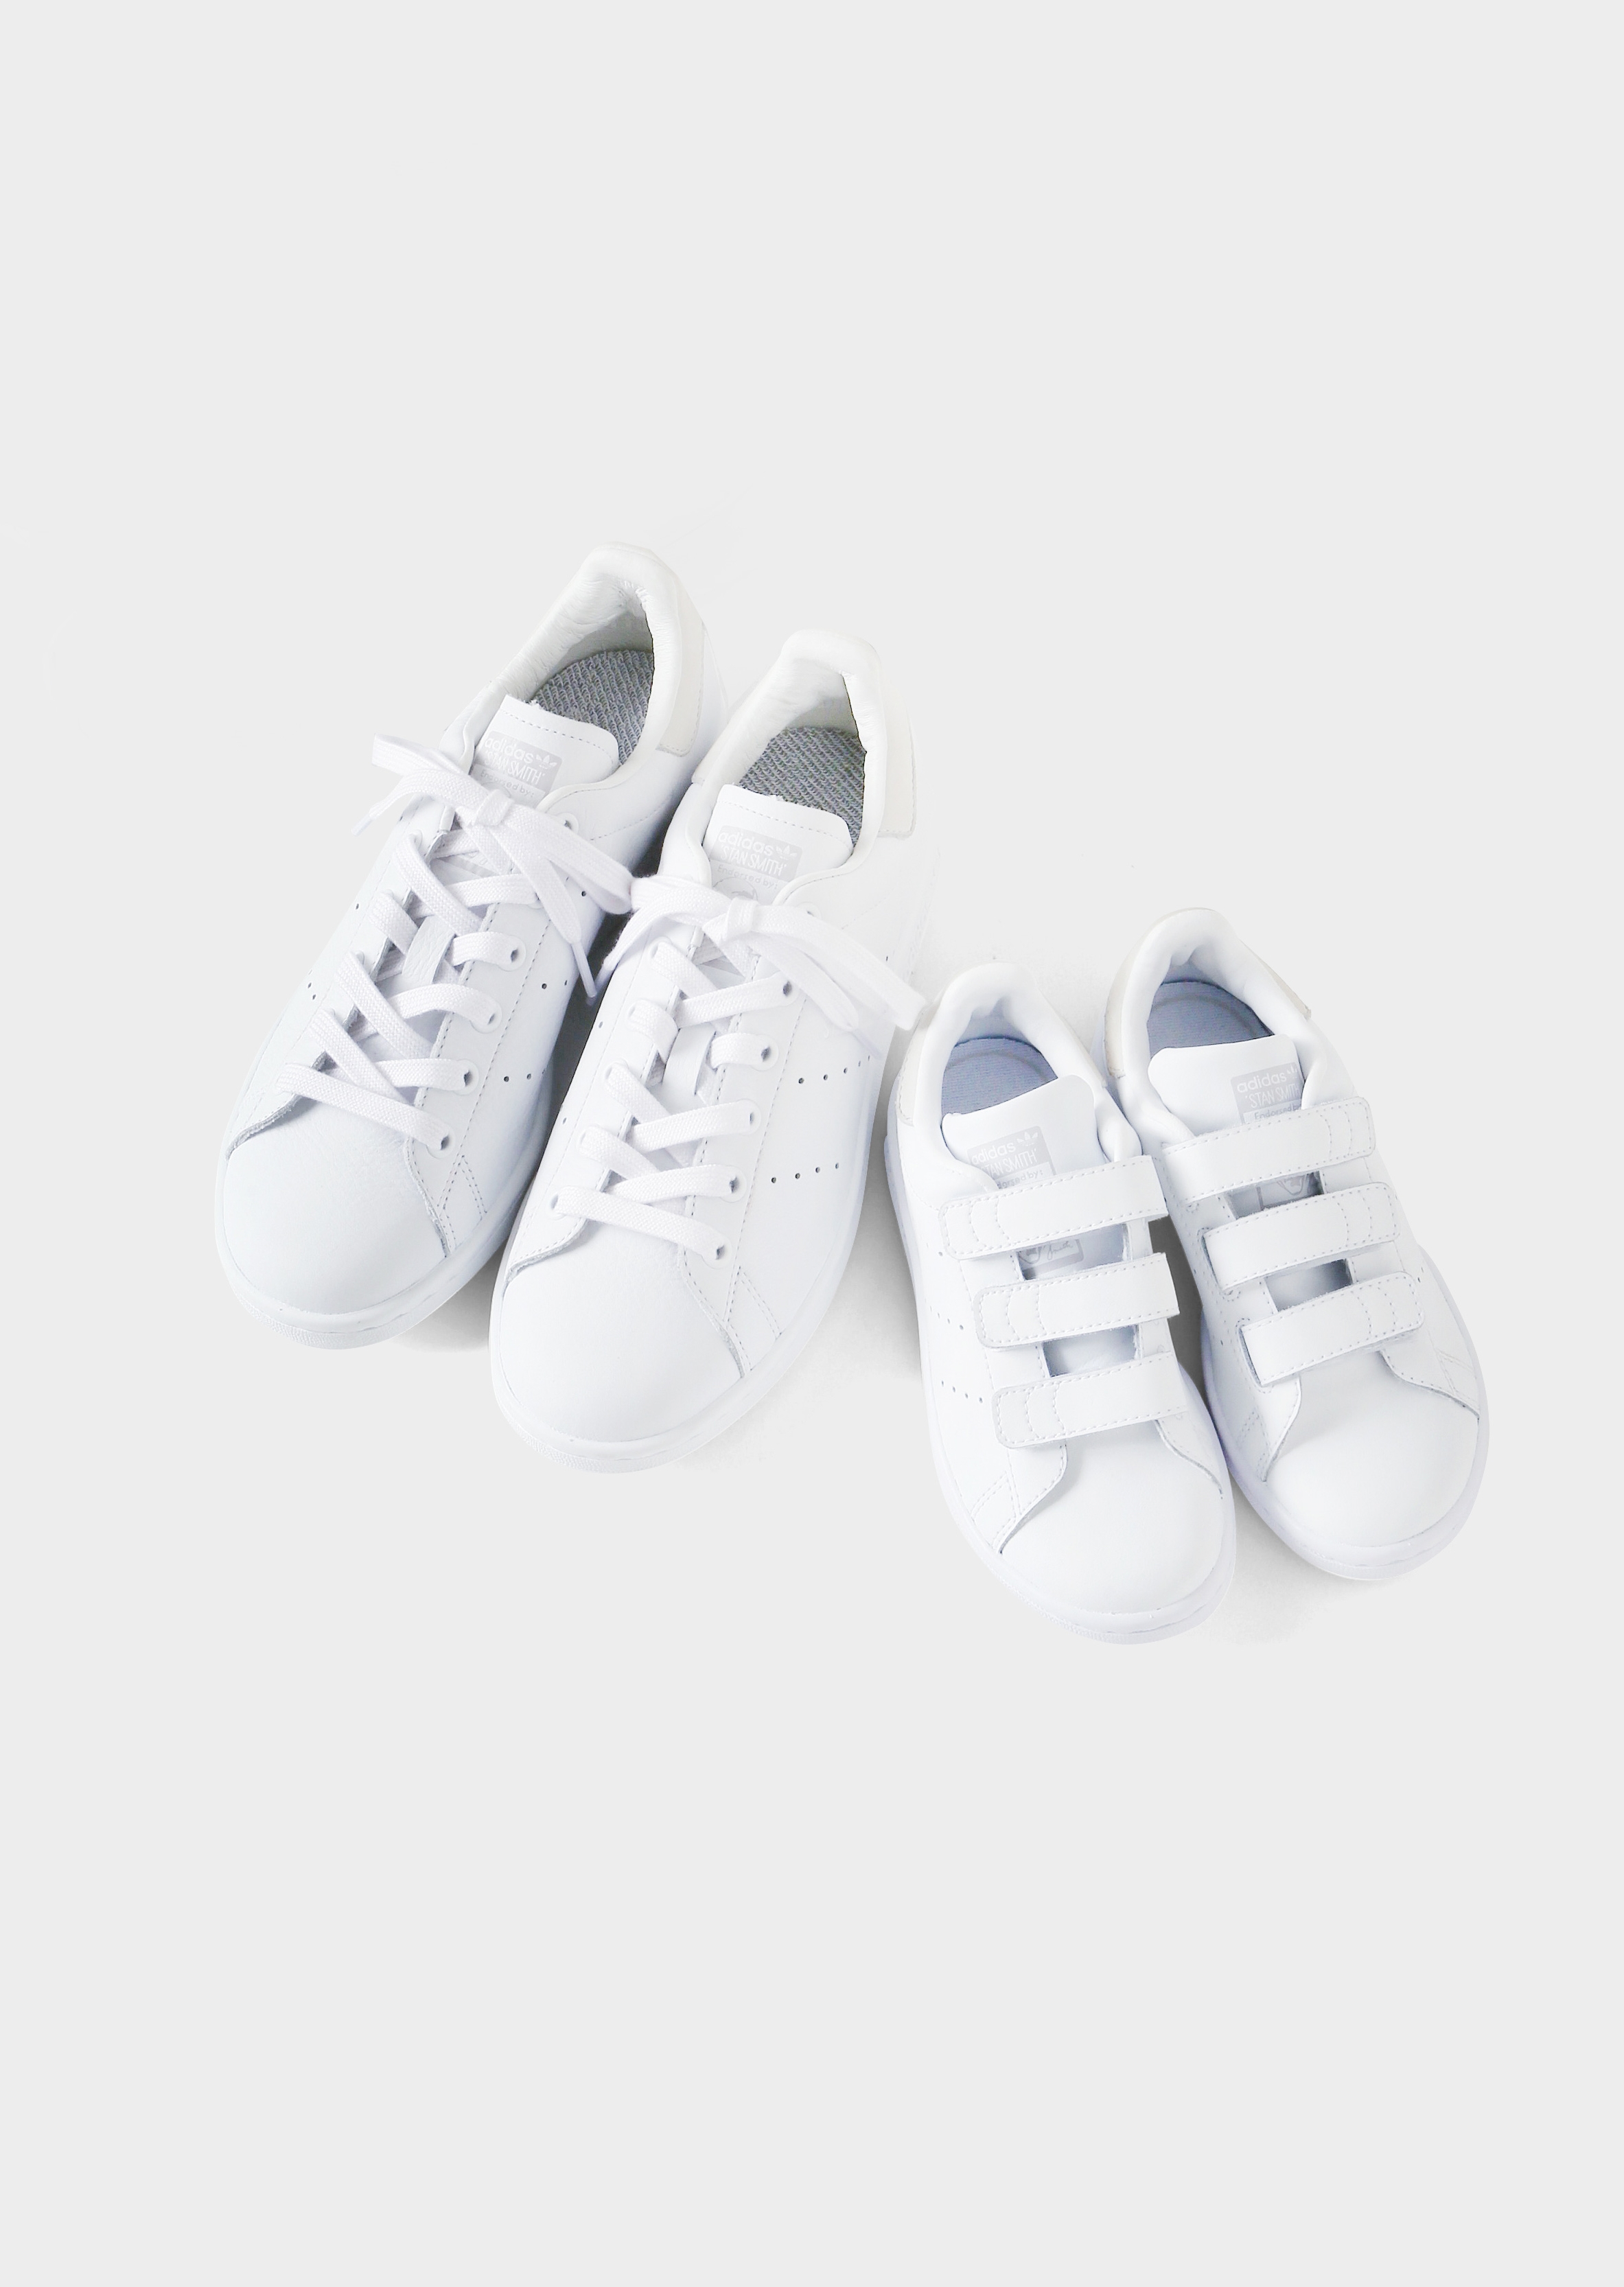 Stan Smith聯名再依發！adidas Originals與日本名模梨花 Rinka合作推出 MAISON DE REEFUR 聯名鞋款 2